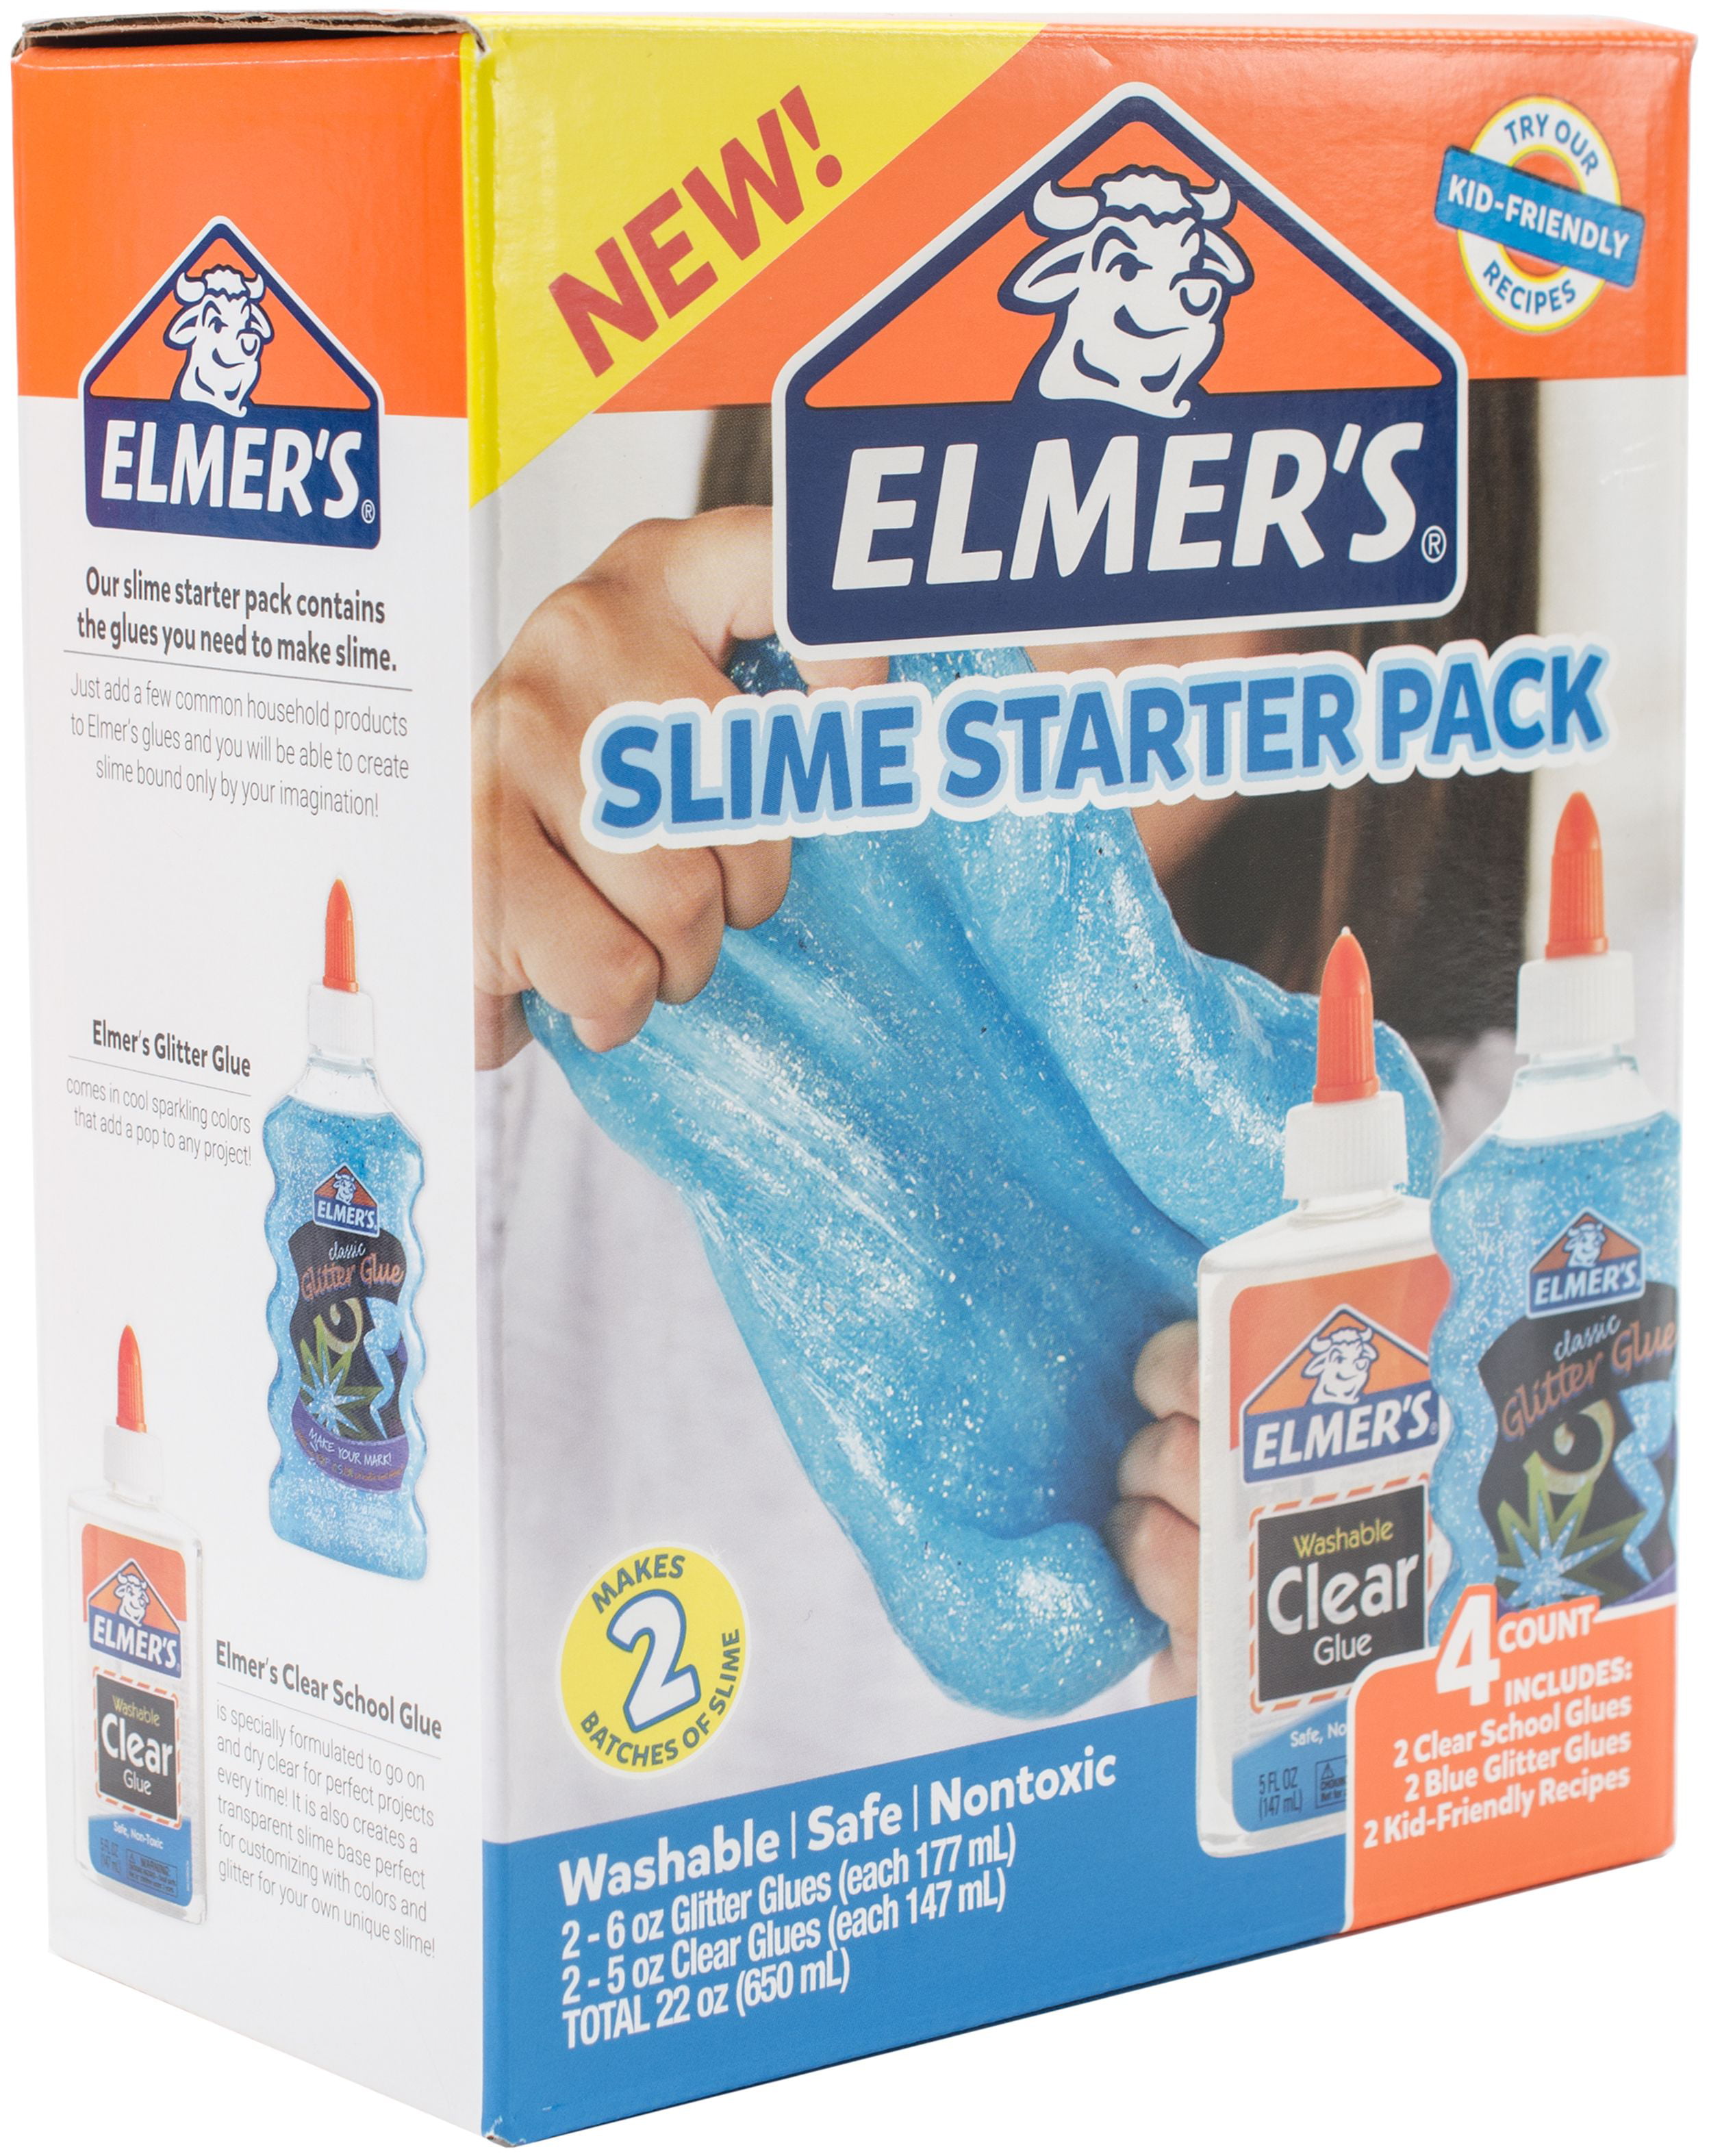 Glue Test for Slime #3 